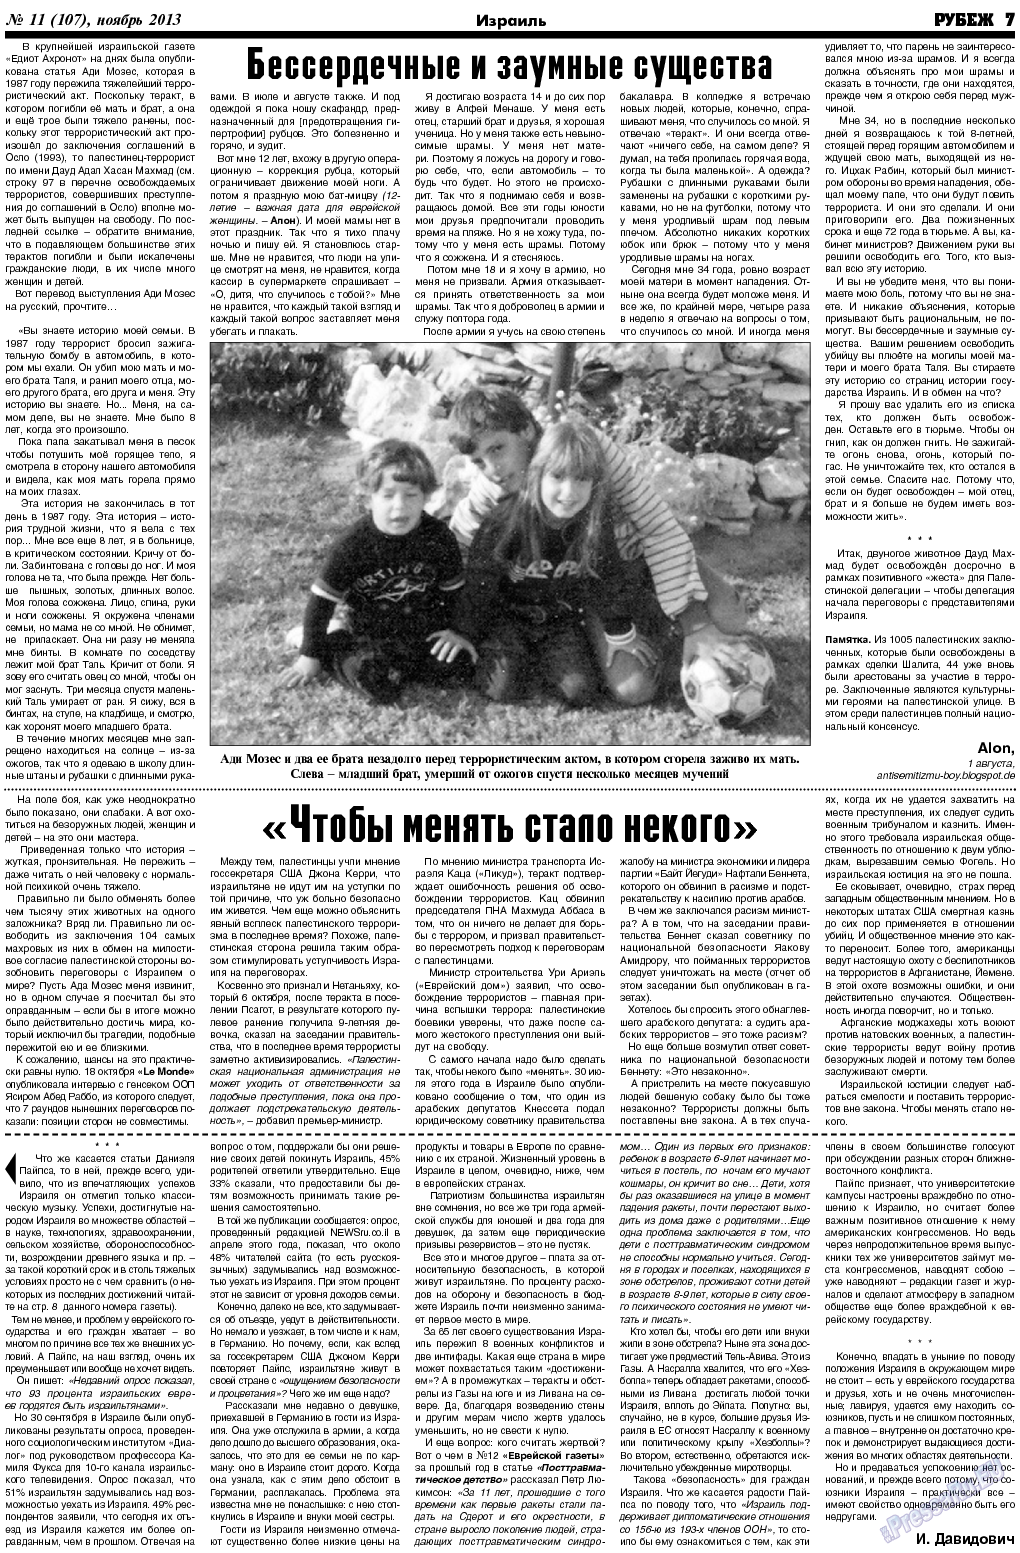 Рубеж, газета. 2013 №11 стр.7